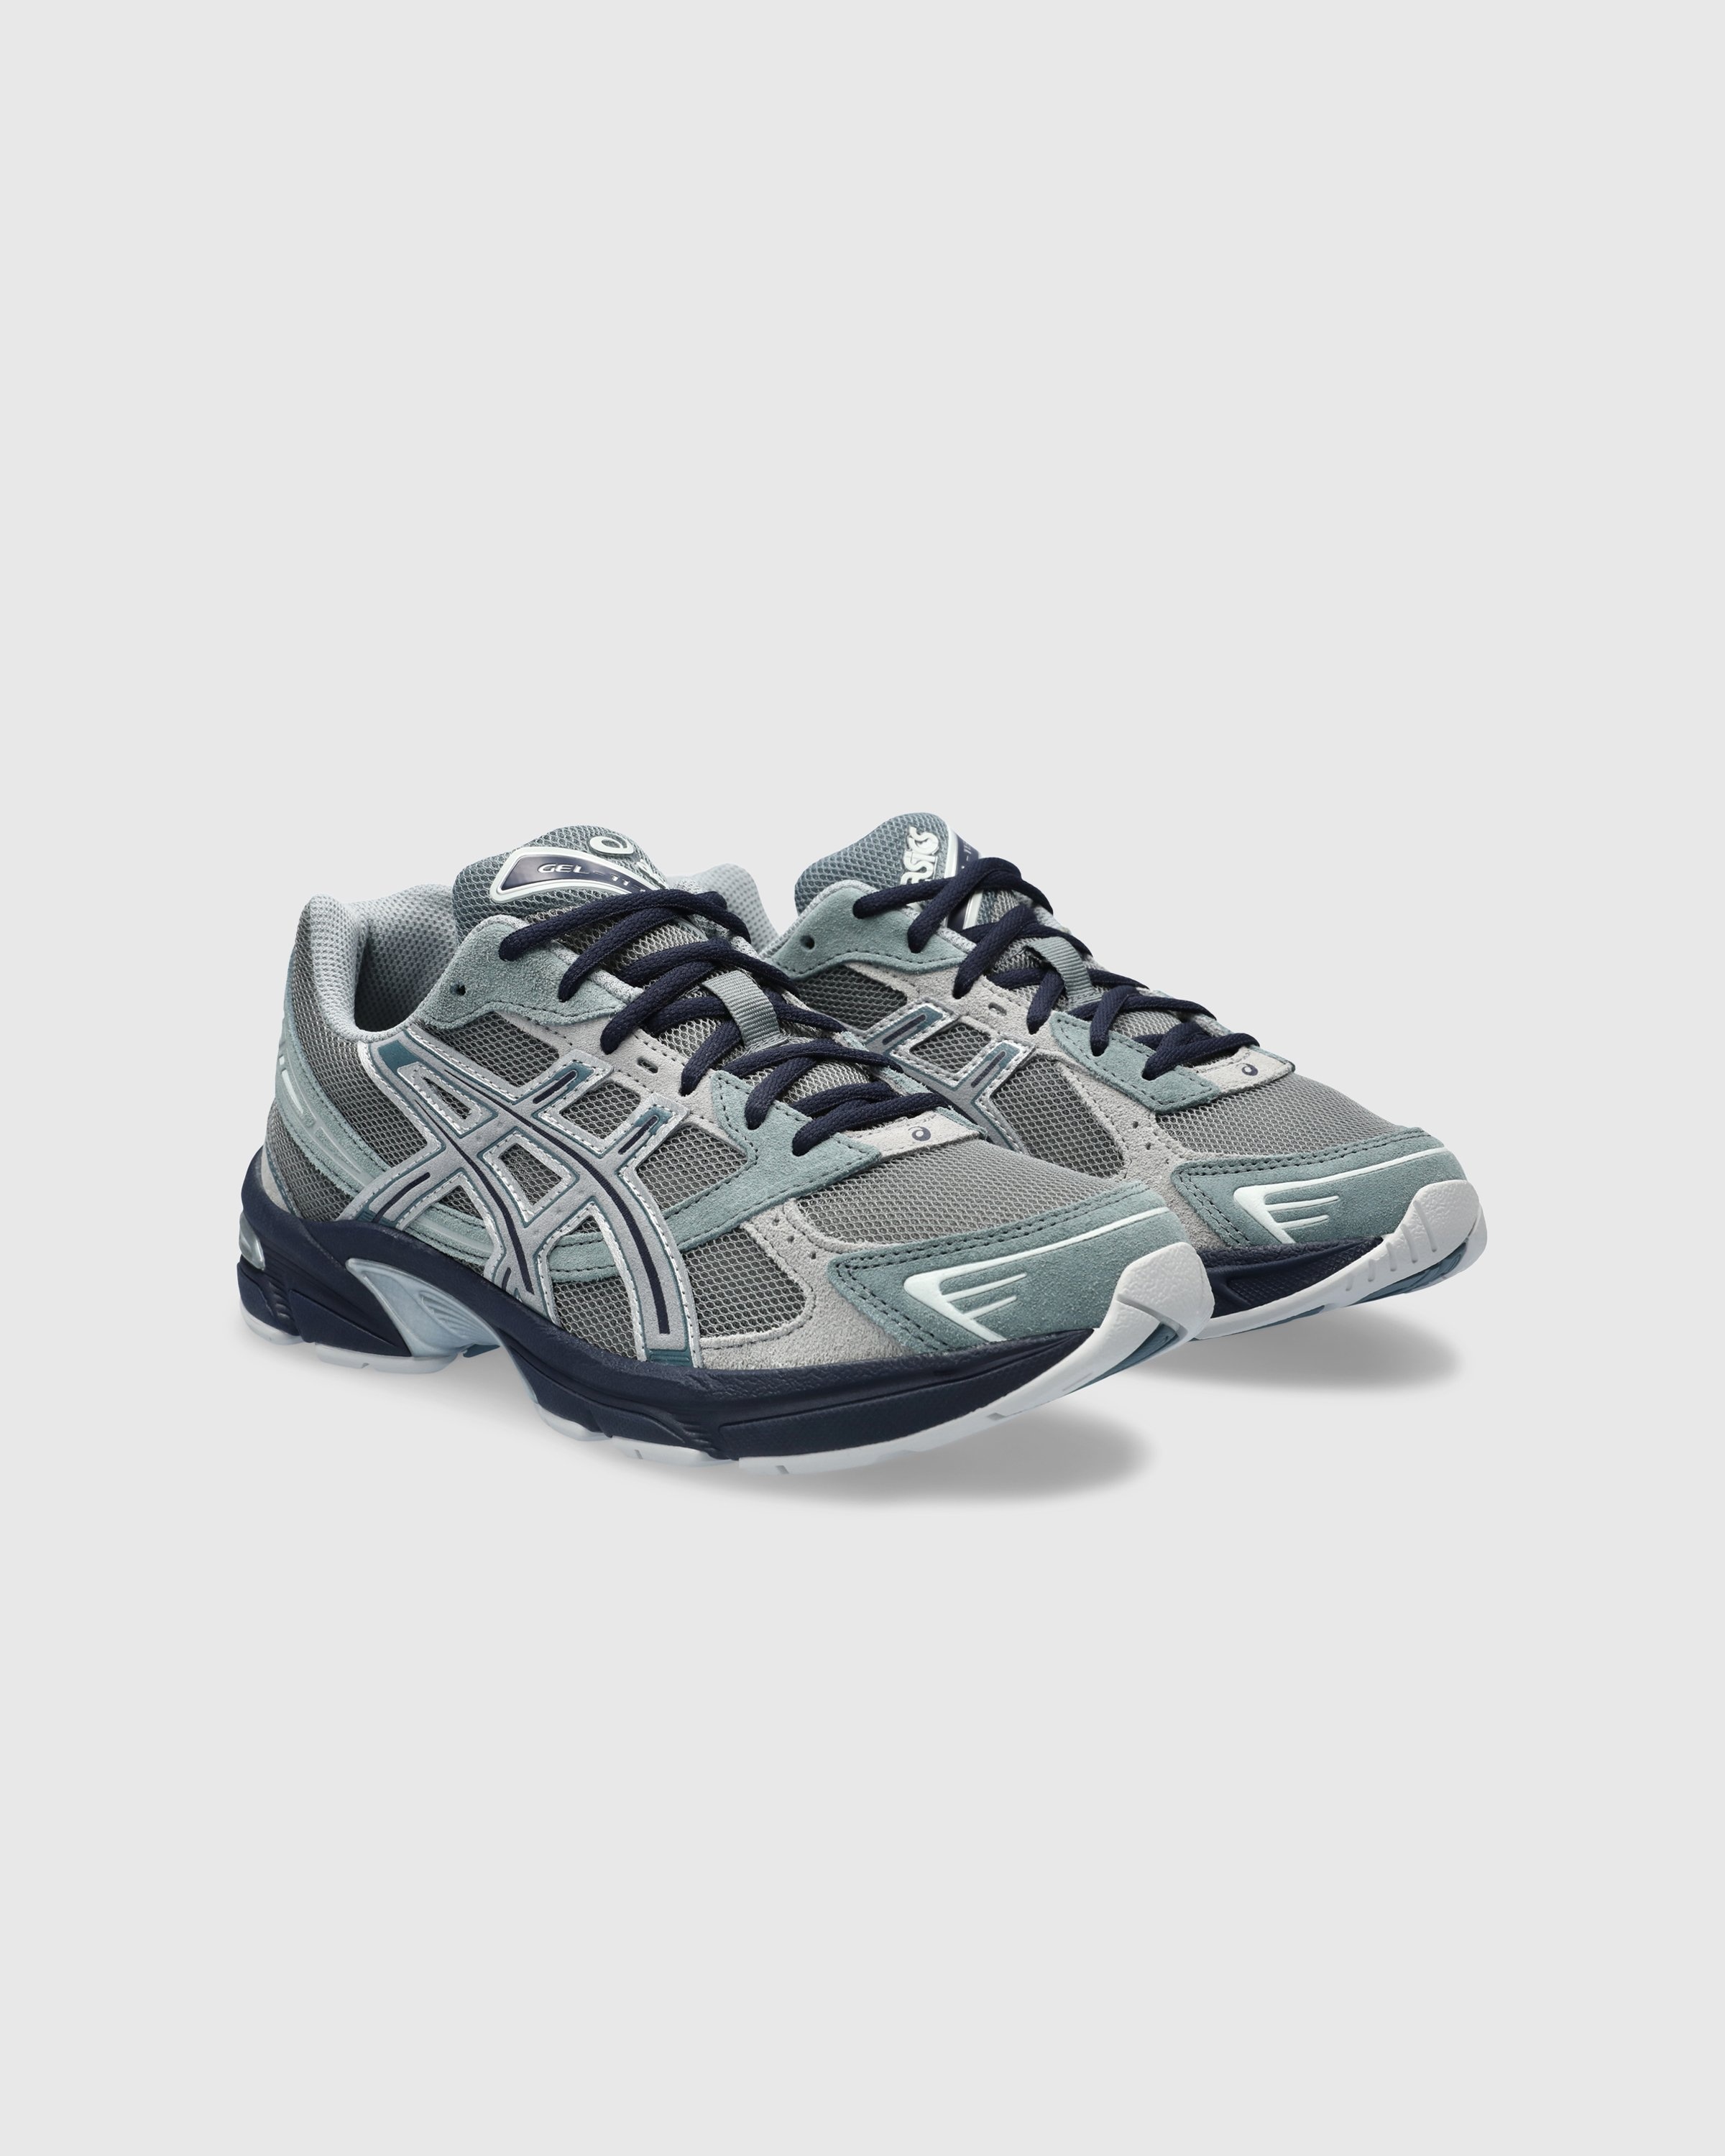 asics – GEL-1130 Steel Gray/Sheet Rock - Sneakers - Grey - Image 3